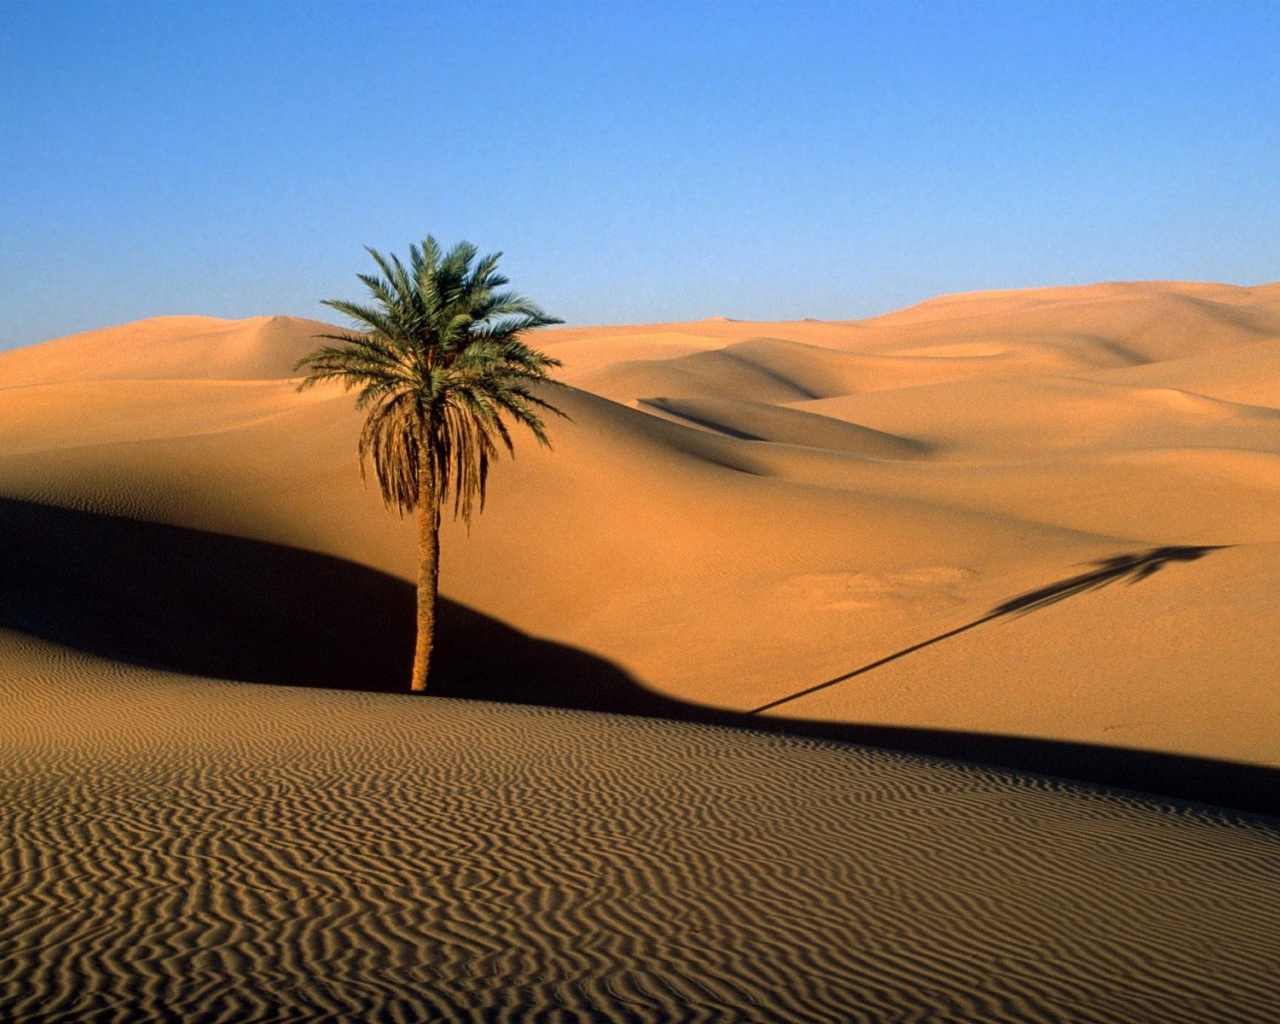 The tree in the desert